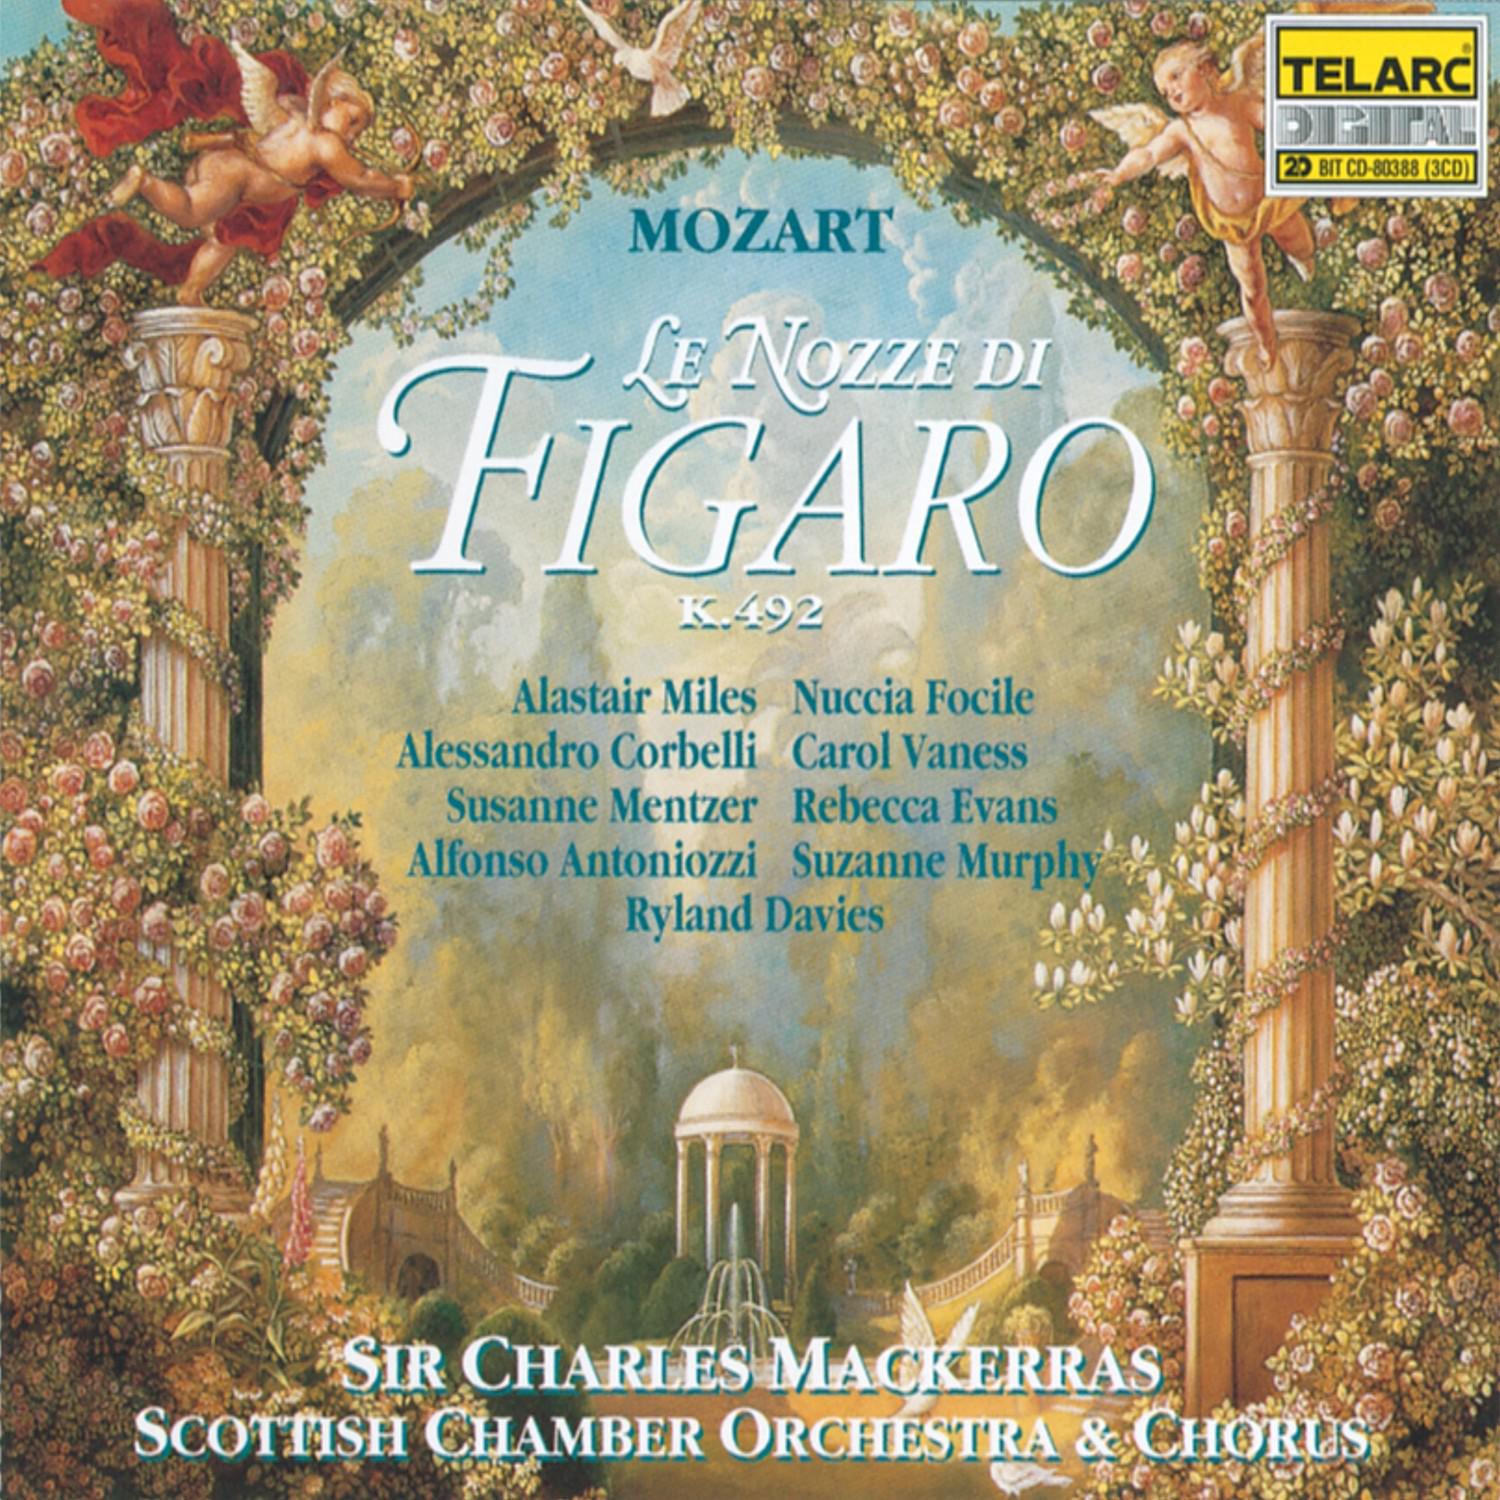 Marriage of Figaro: Recitativo: "Madre"